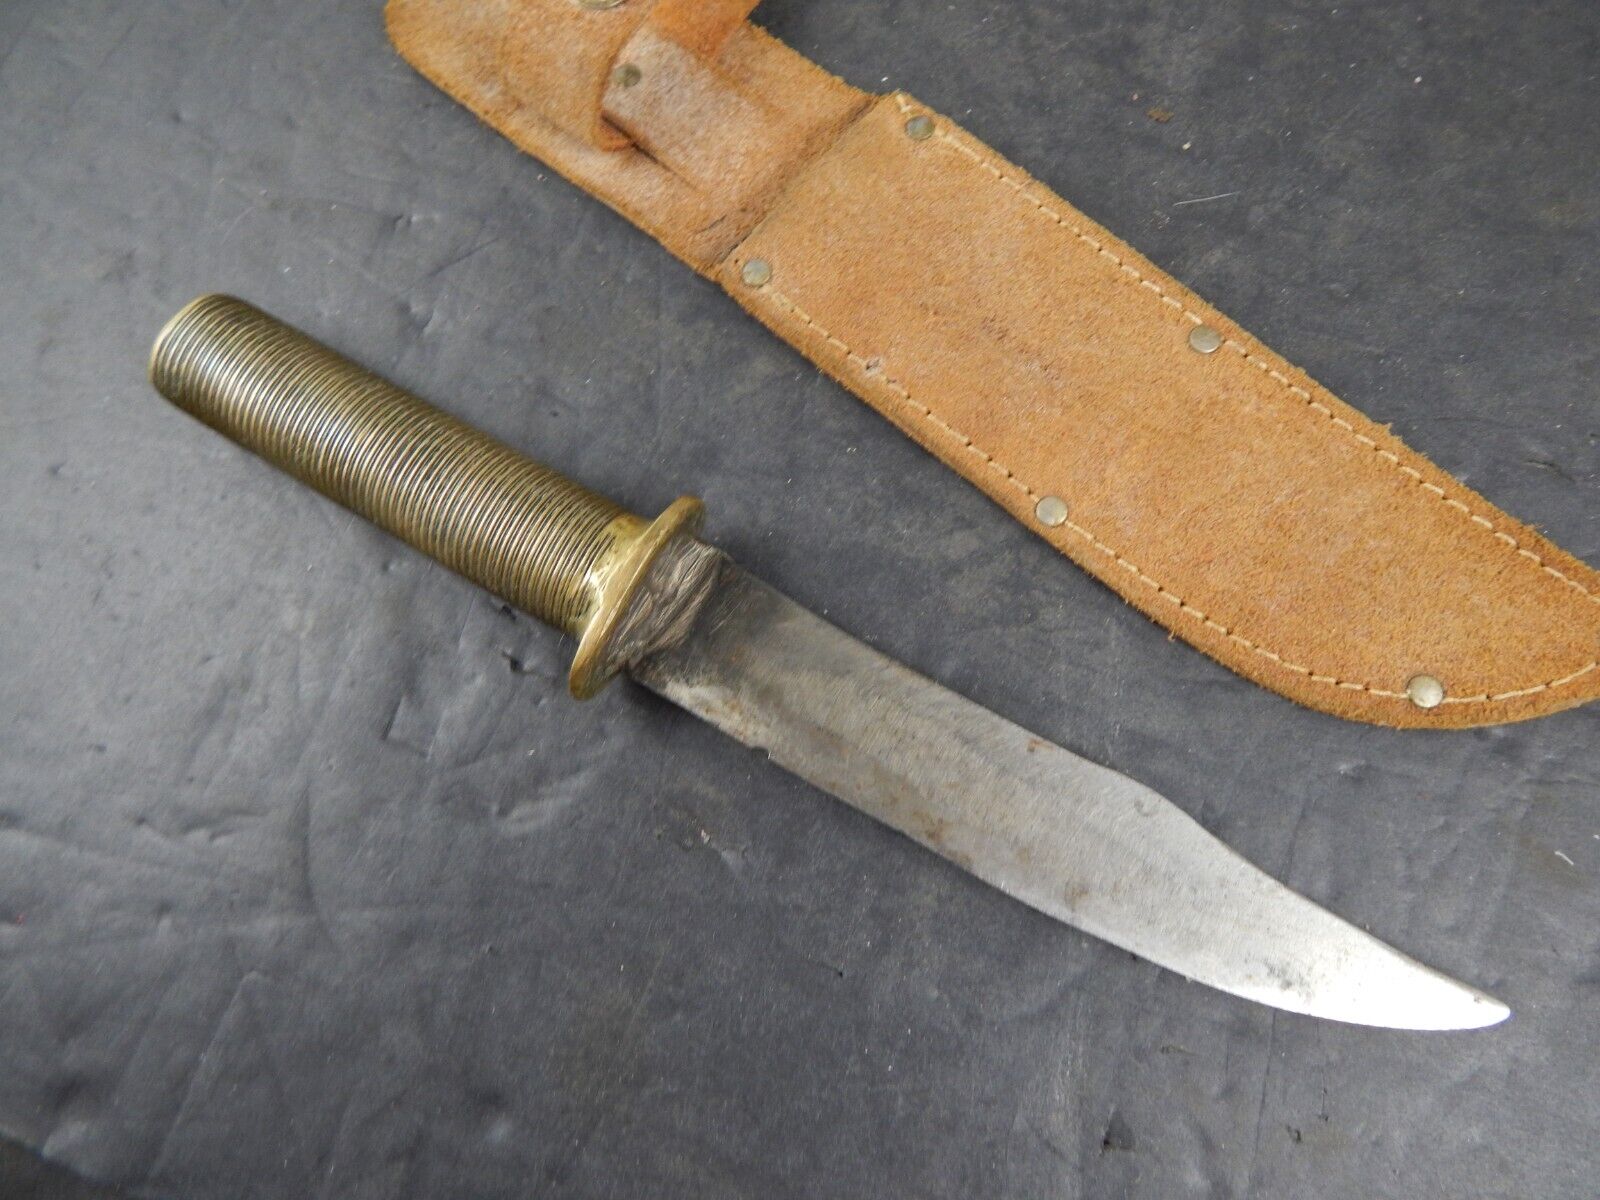 WW2-era Handmade THEATER KNIFE